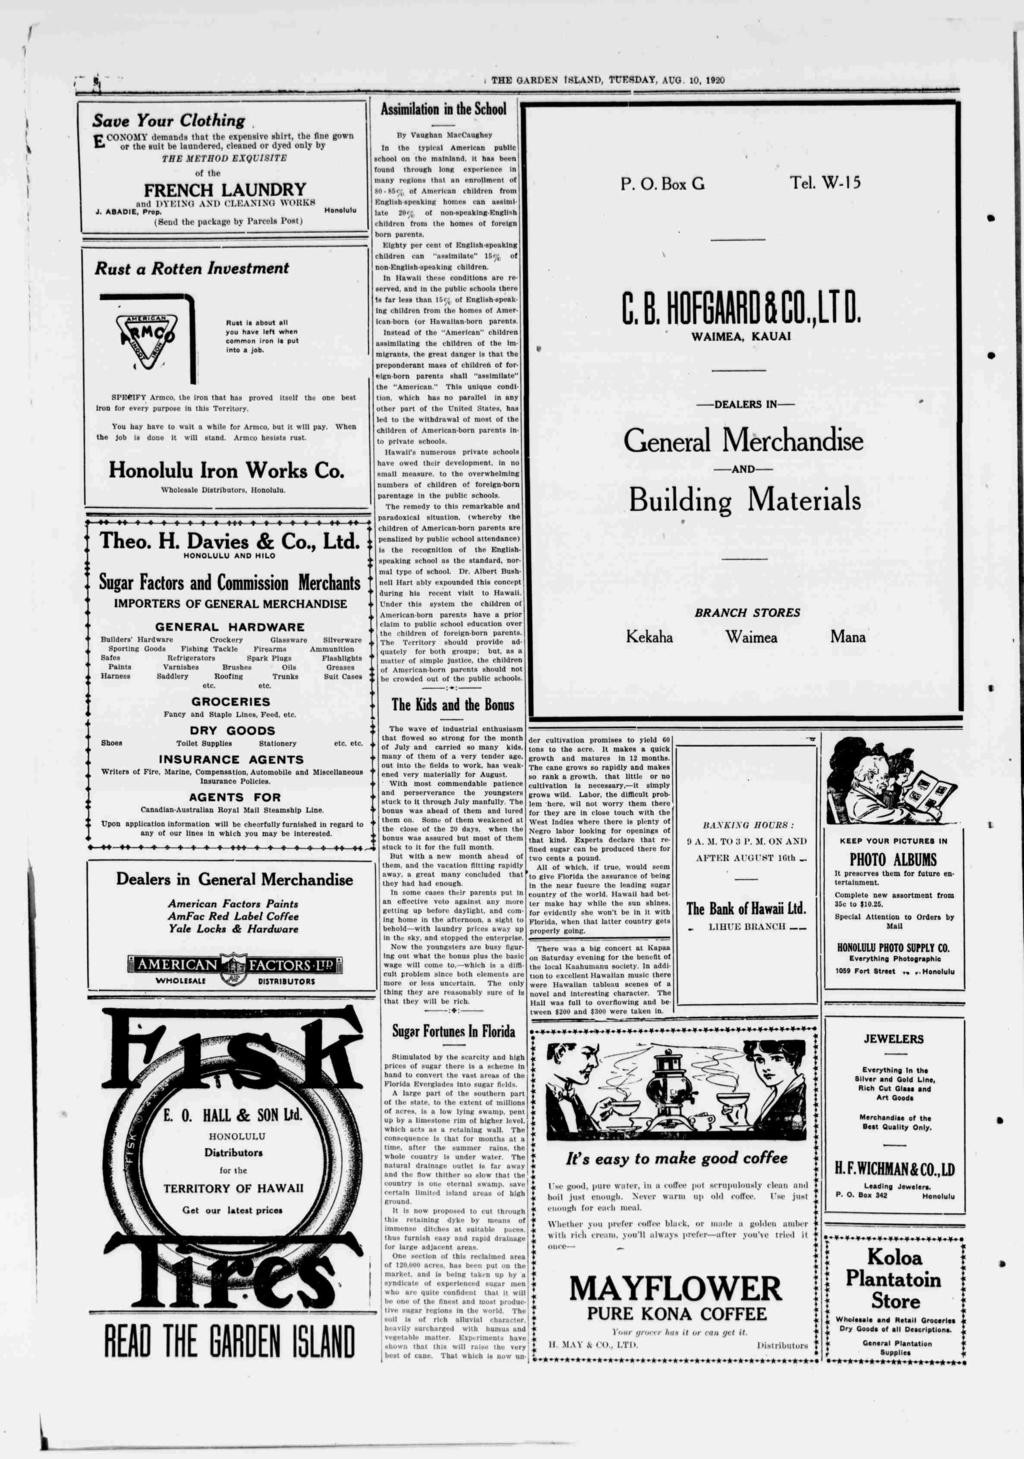 THE GARDEN TSLAND, TUESDAY, AUG. 10, 1920 Save Your Clohing.